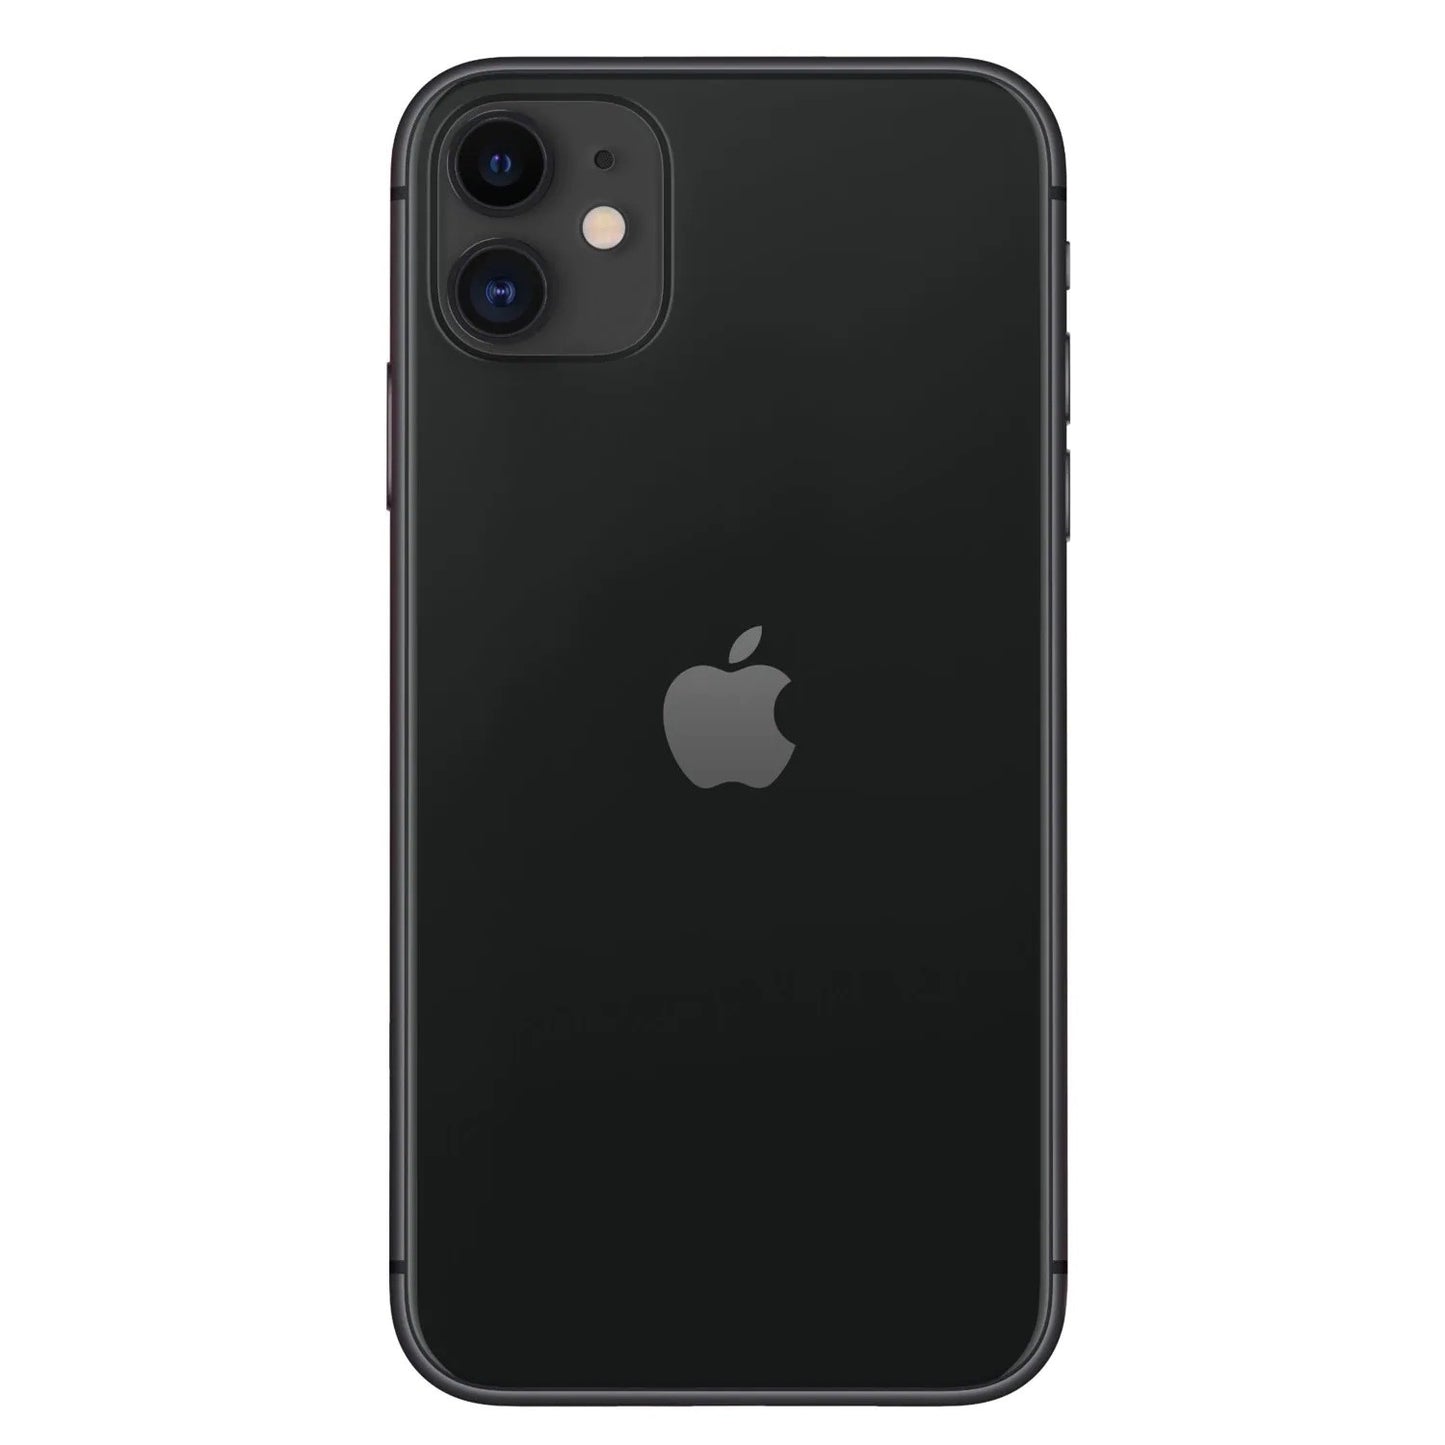 Apple iPhone 11 128GB – Black